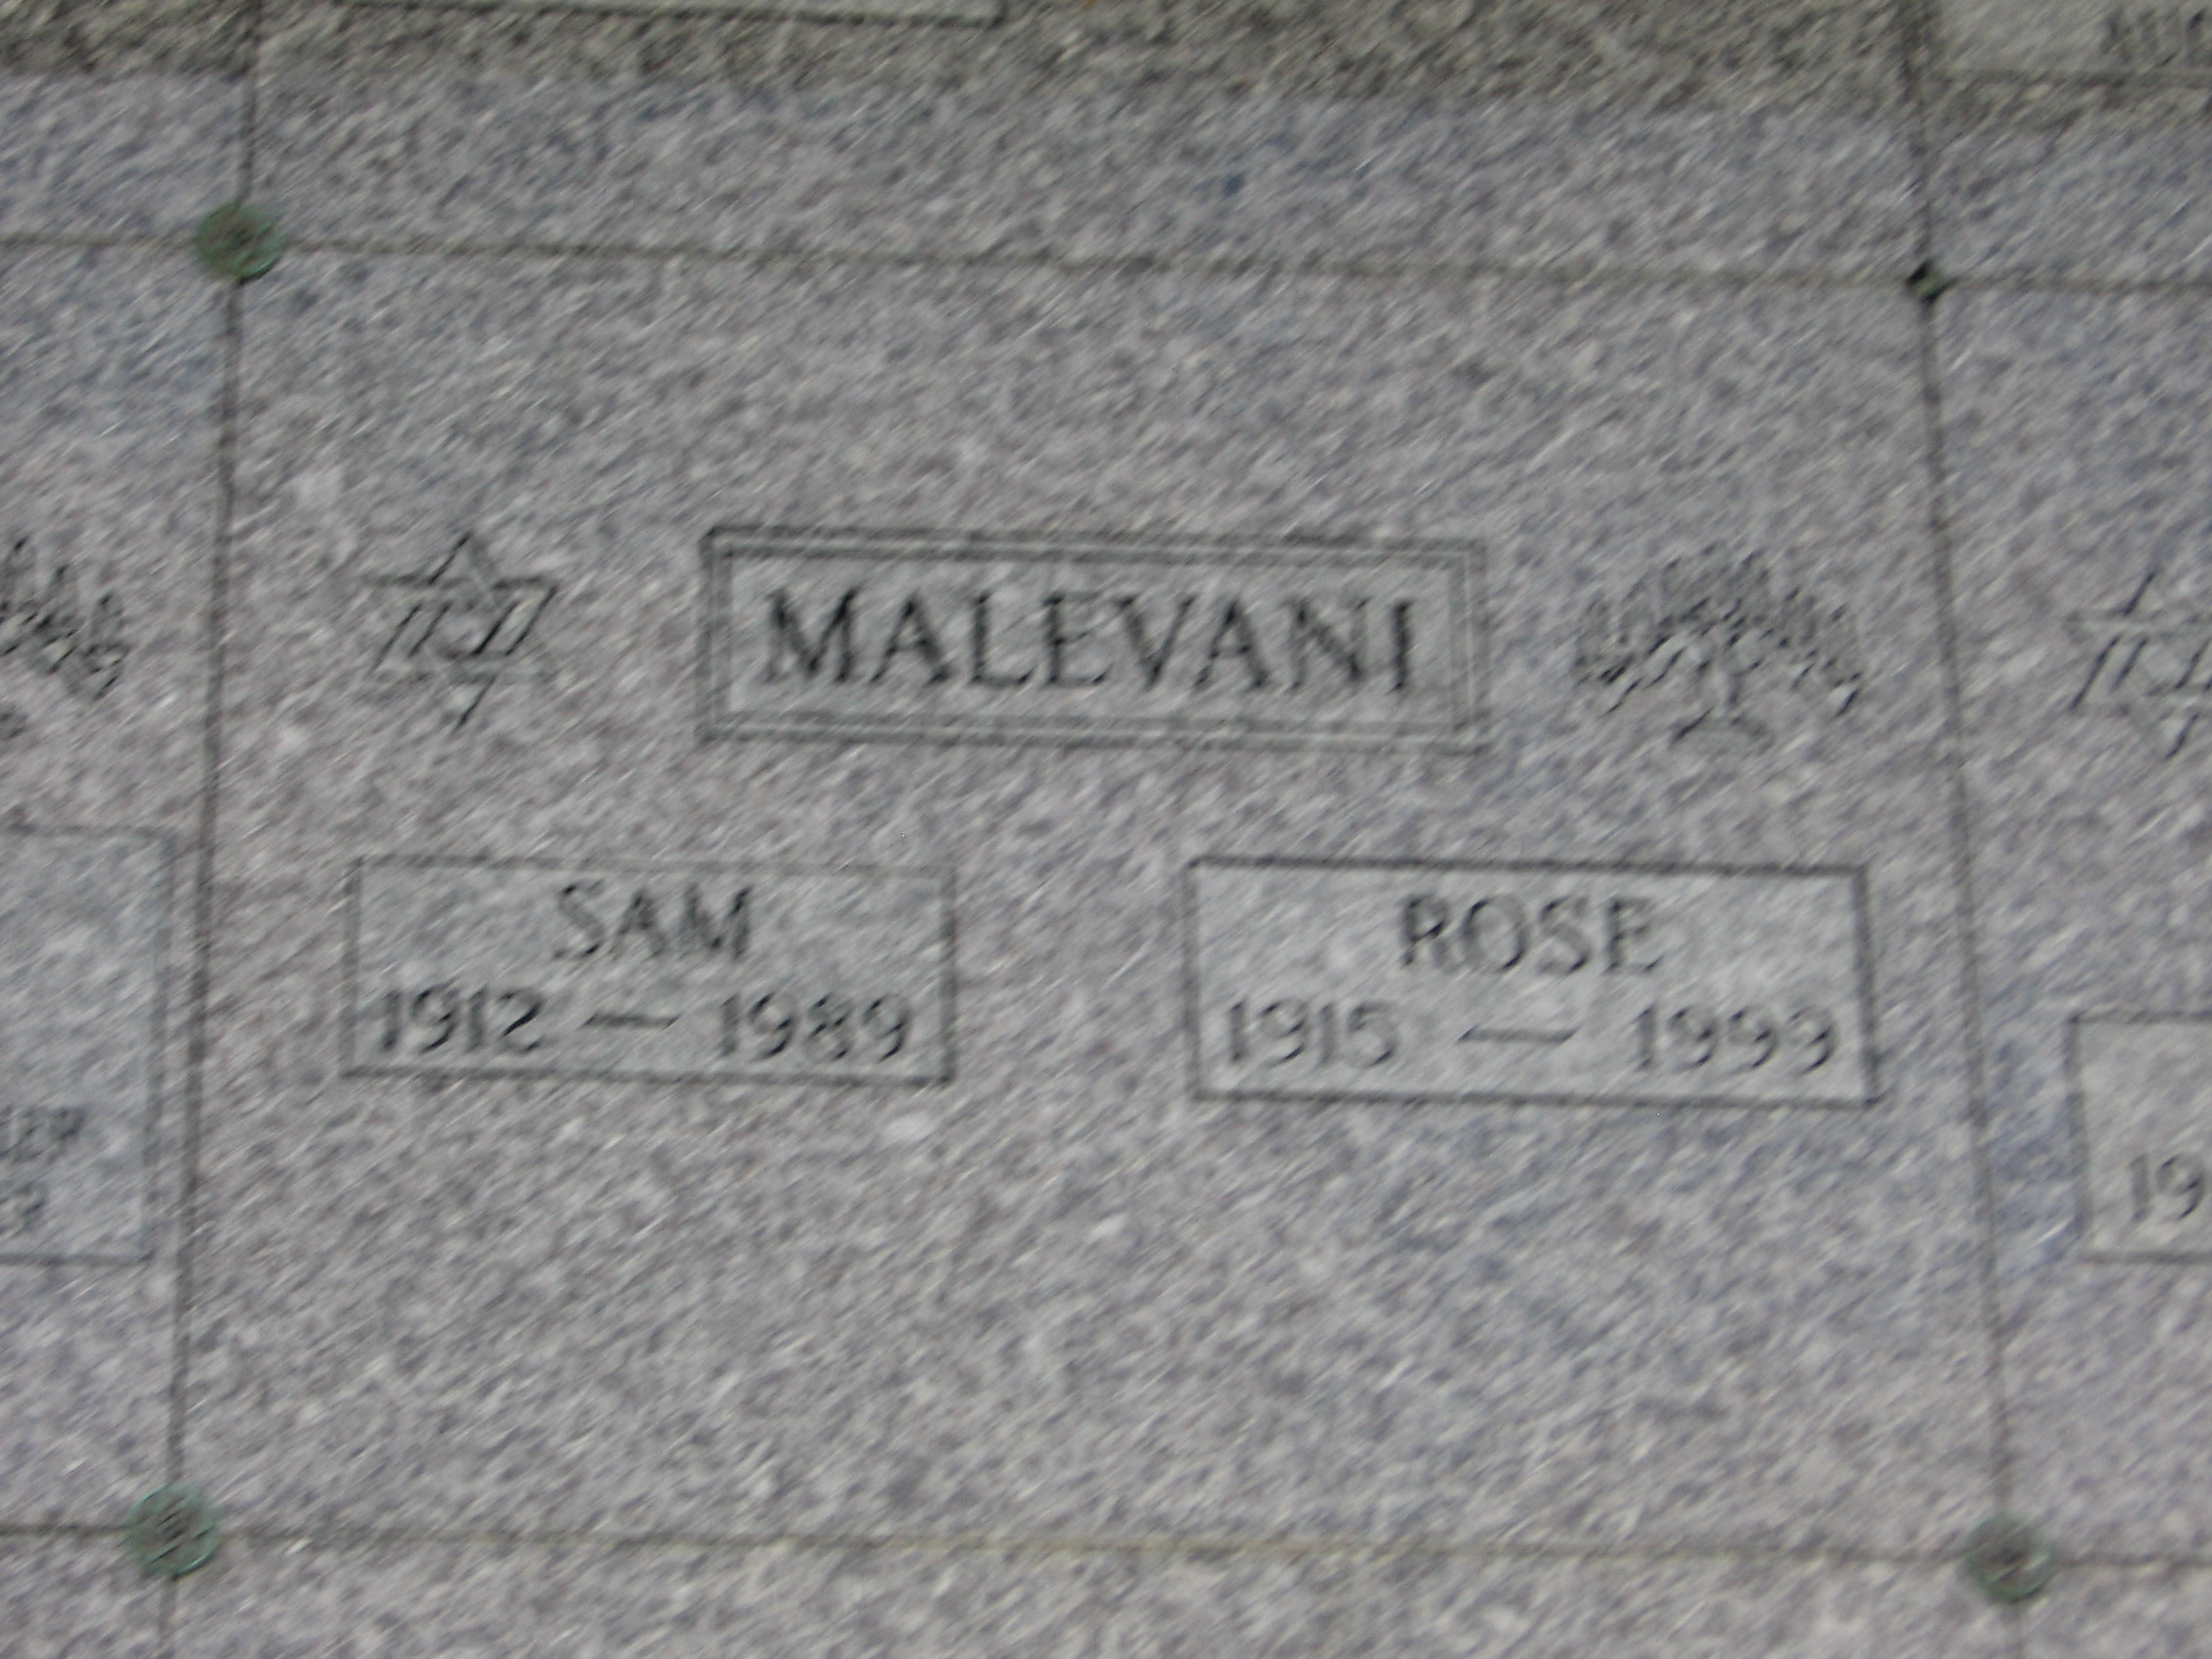 Sam Malevani